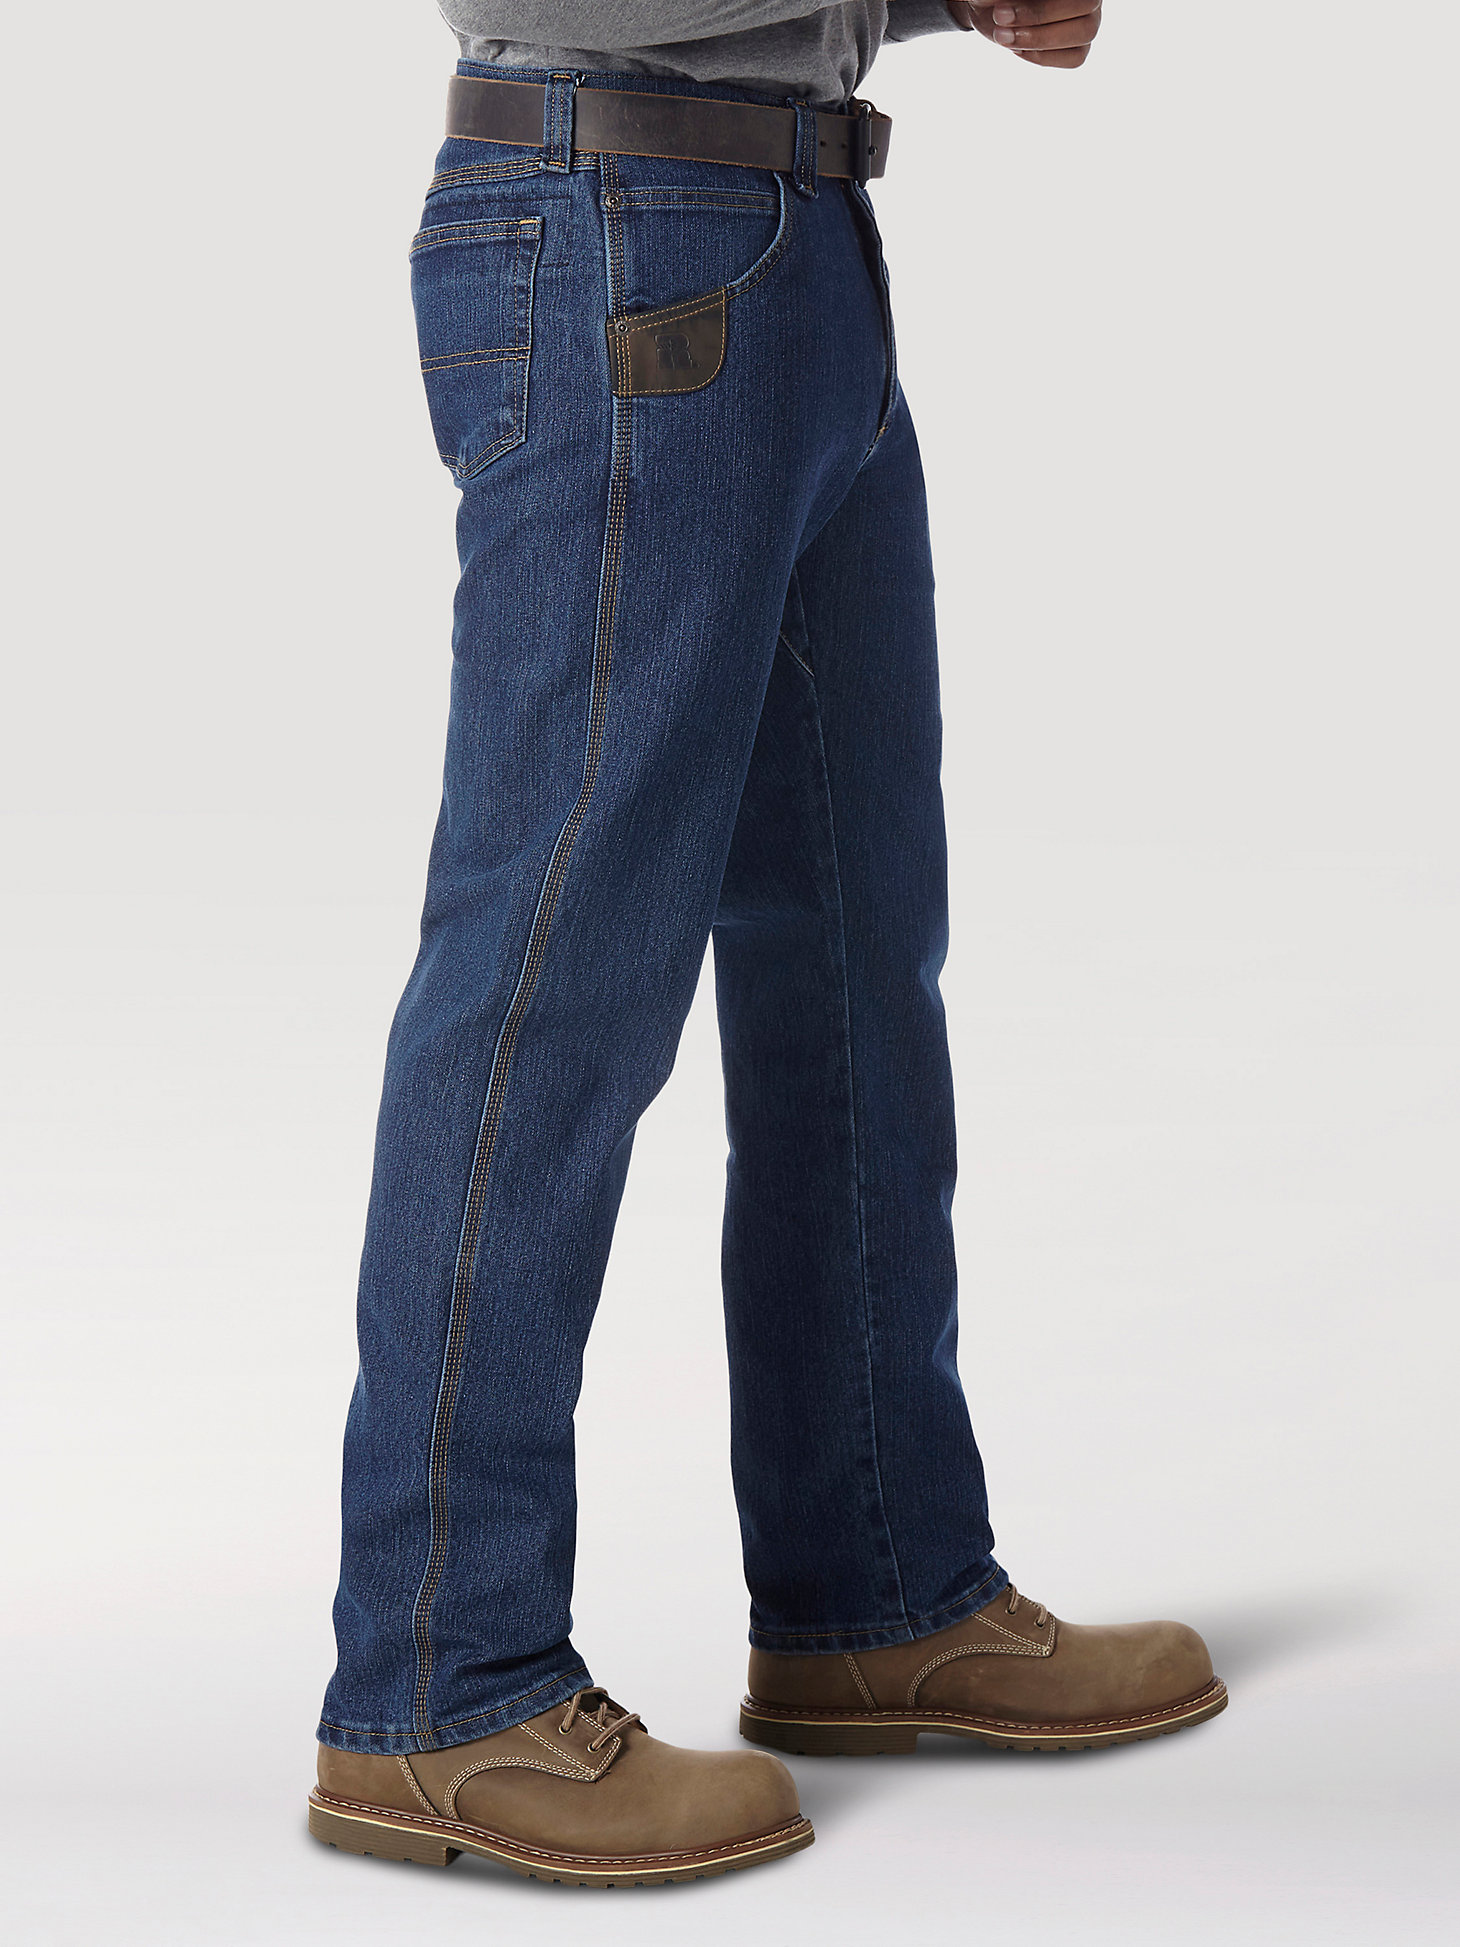 Wrangler® RIGGS Workwear® Advanced Comfort Five Pocket Jean in Mid Stone alternative view 1